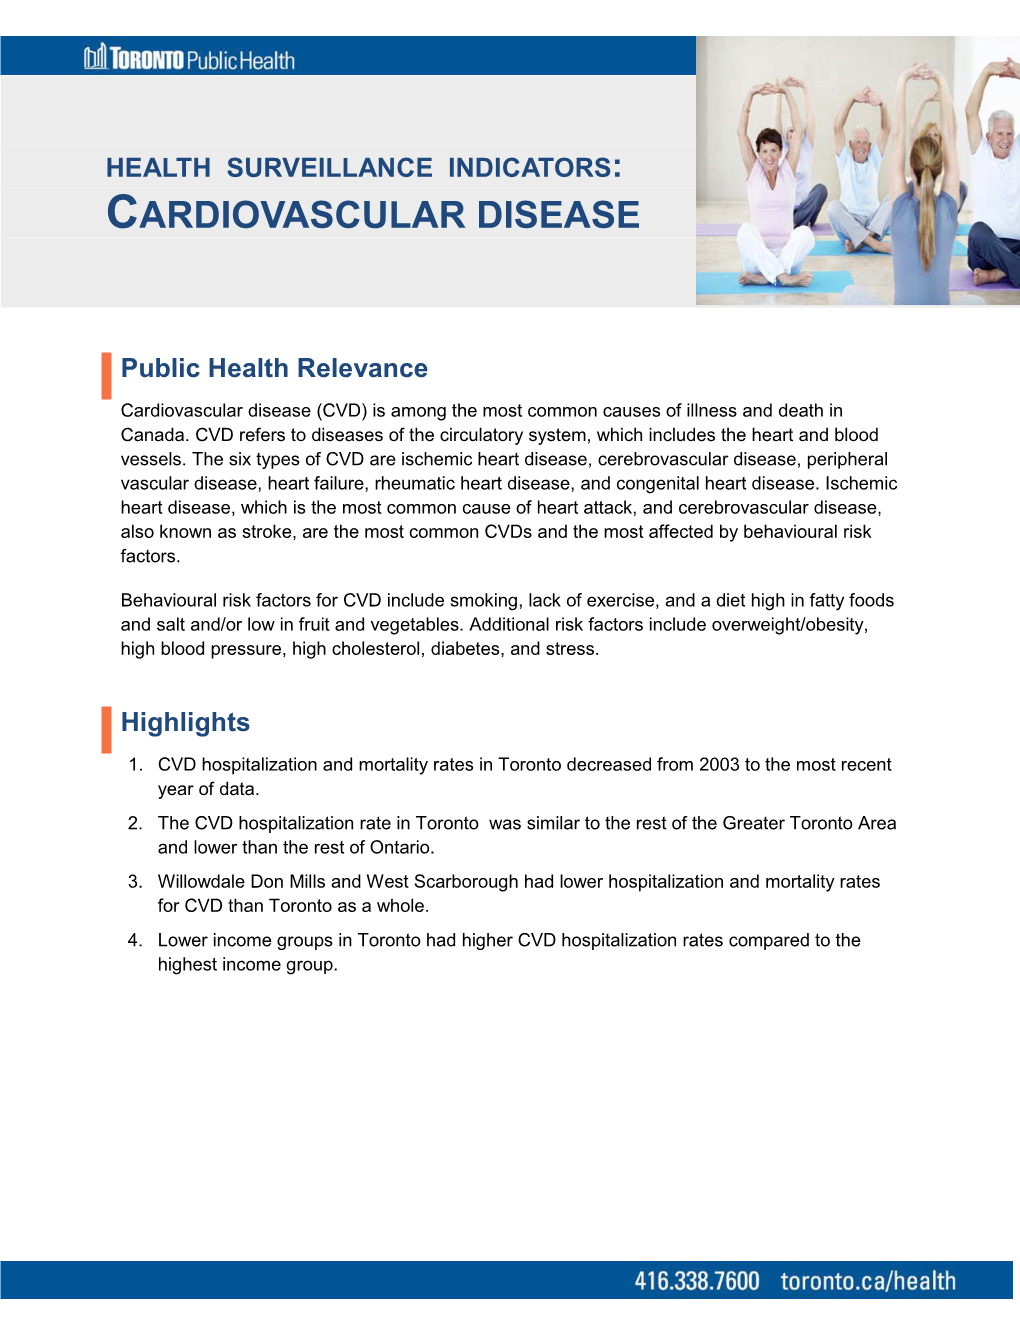 Health Surveillance Indicators: Cardiovascular Disease